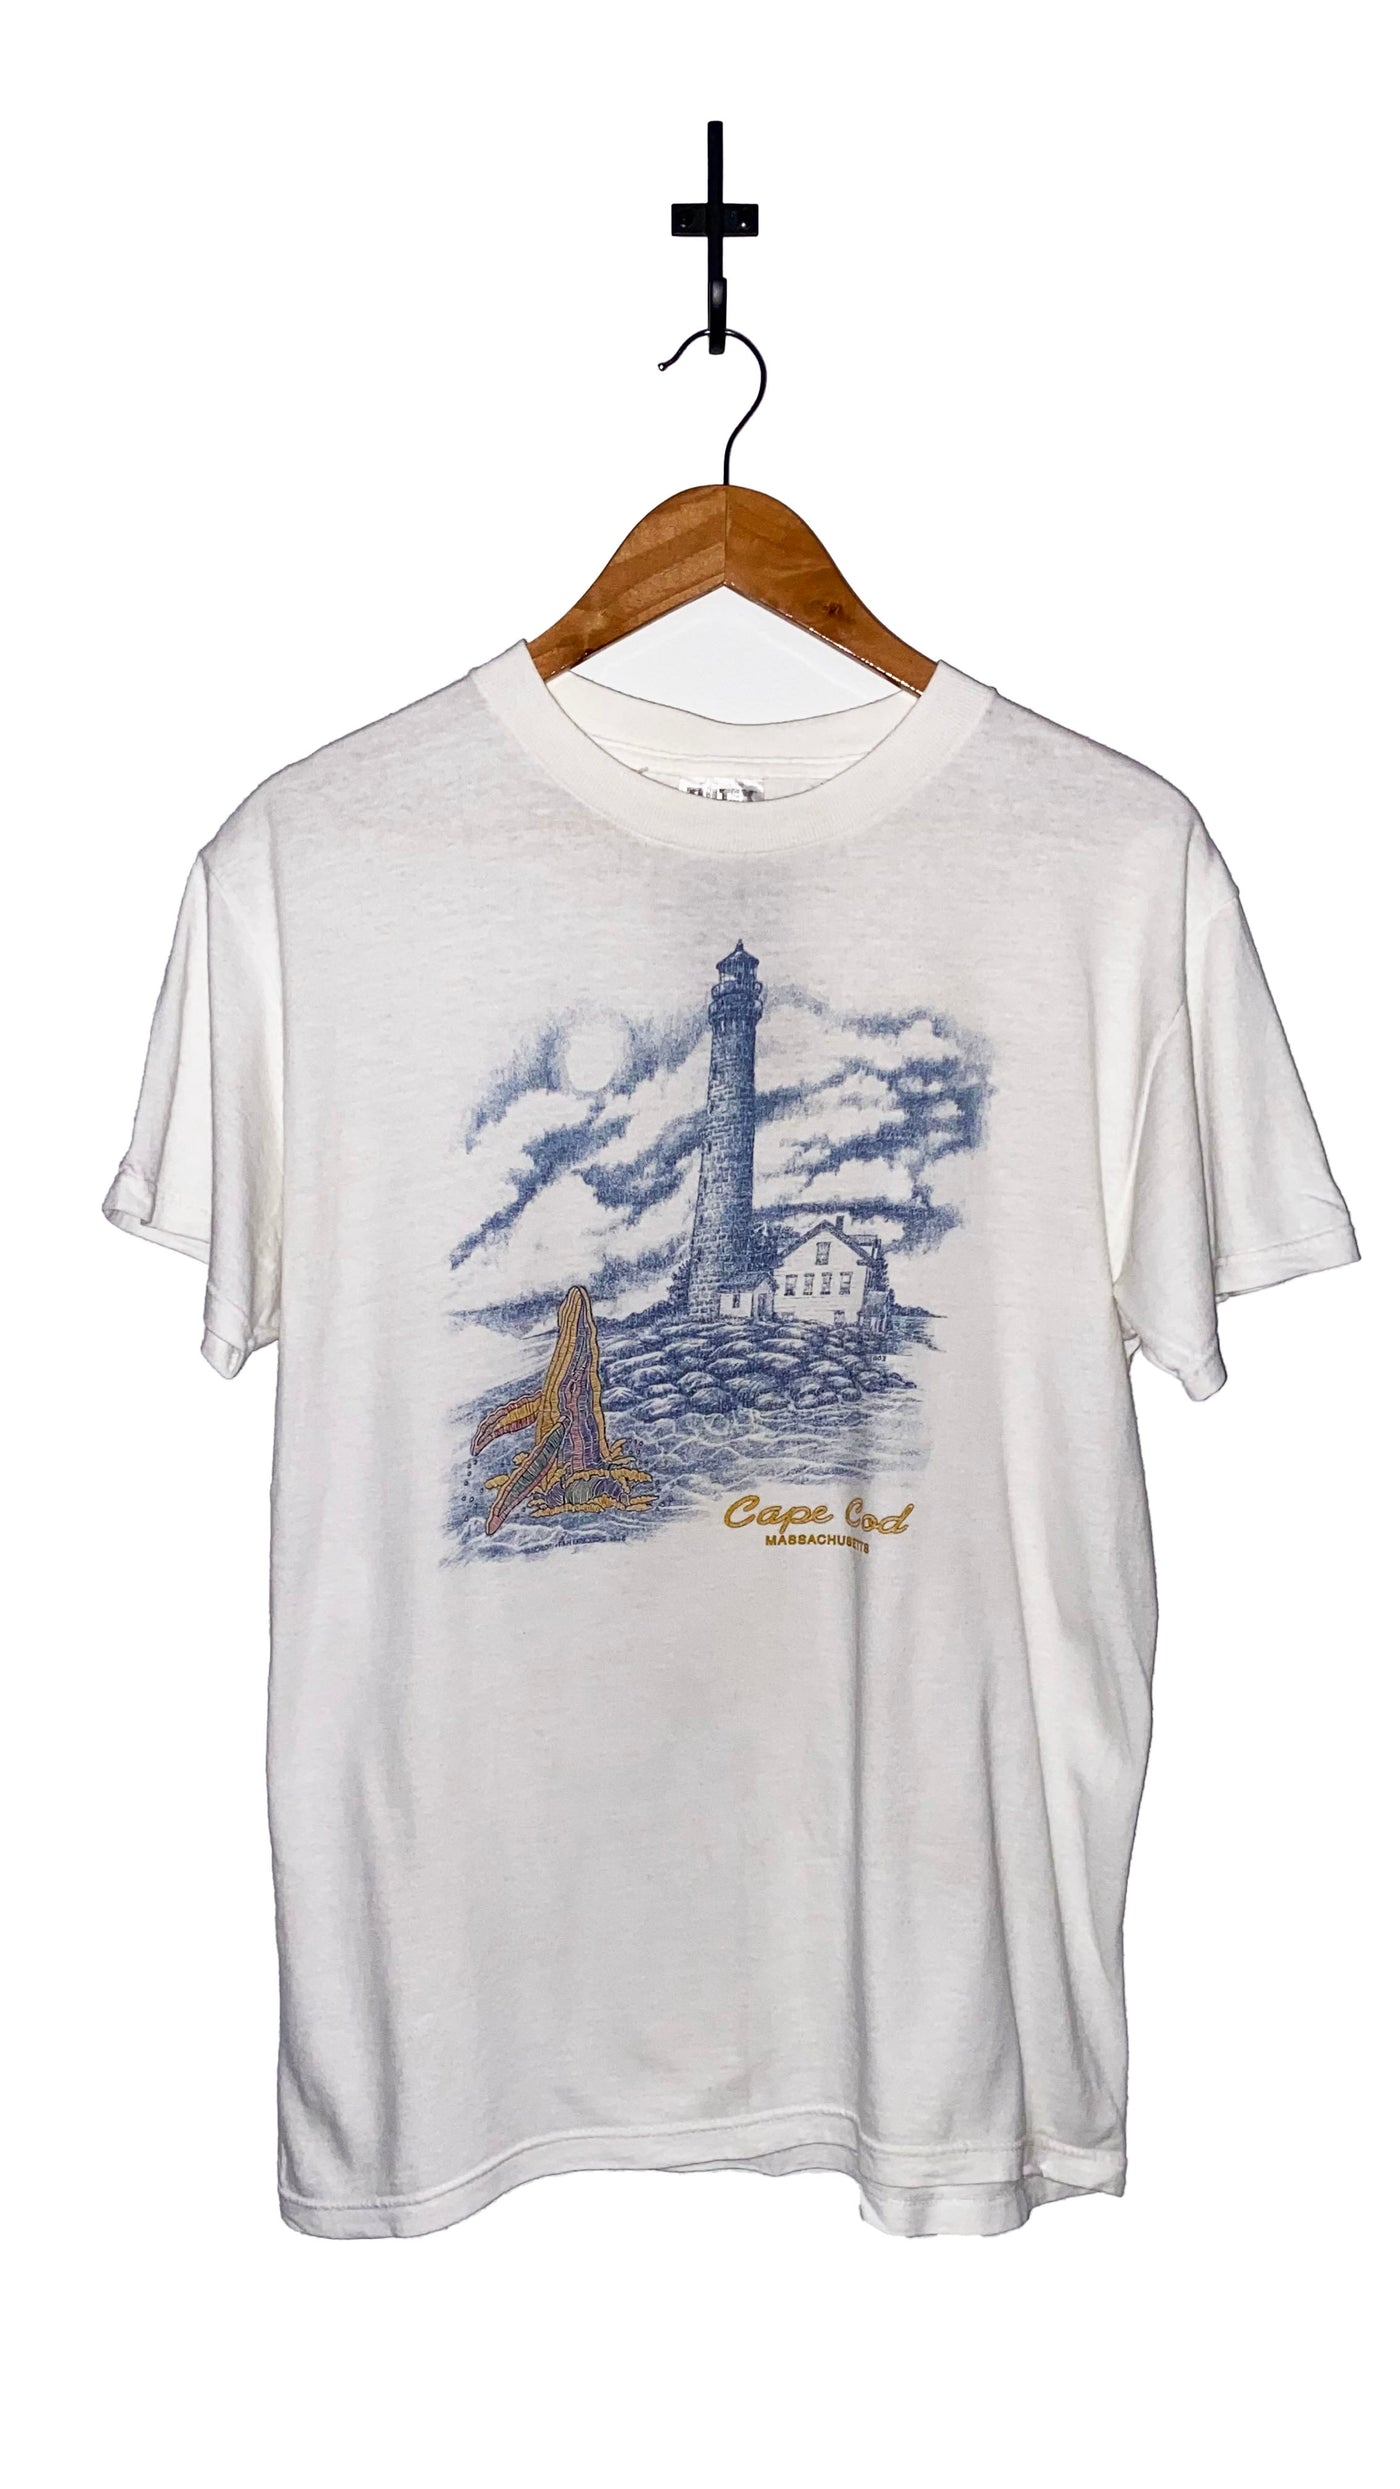 Vintage Cape Cod, Massachusetts T-Shirt